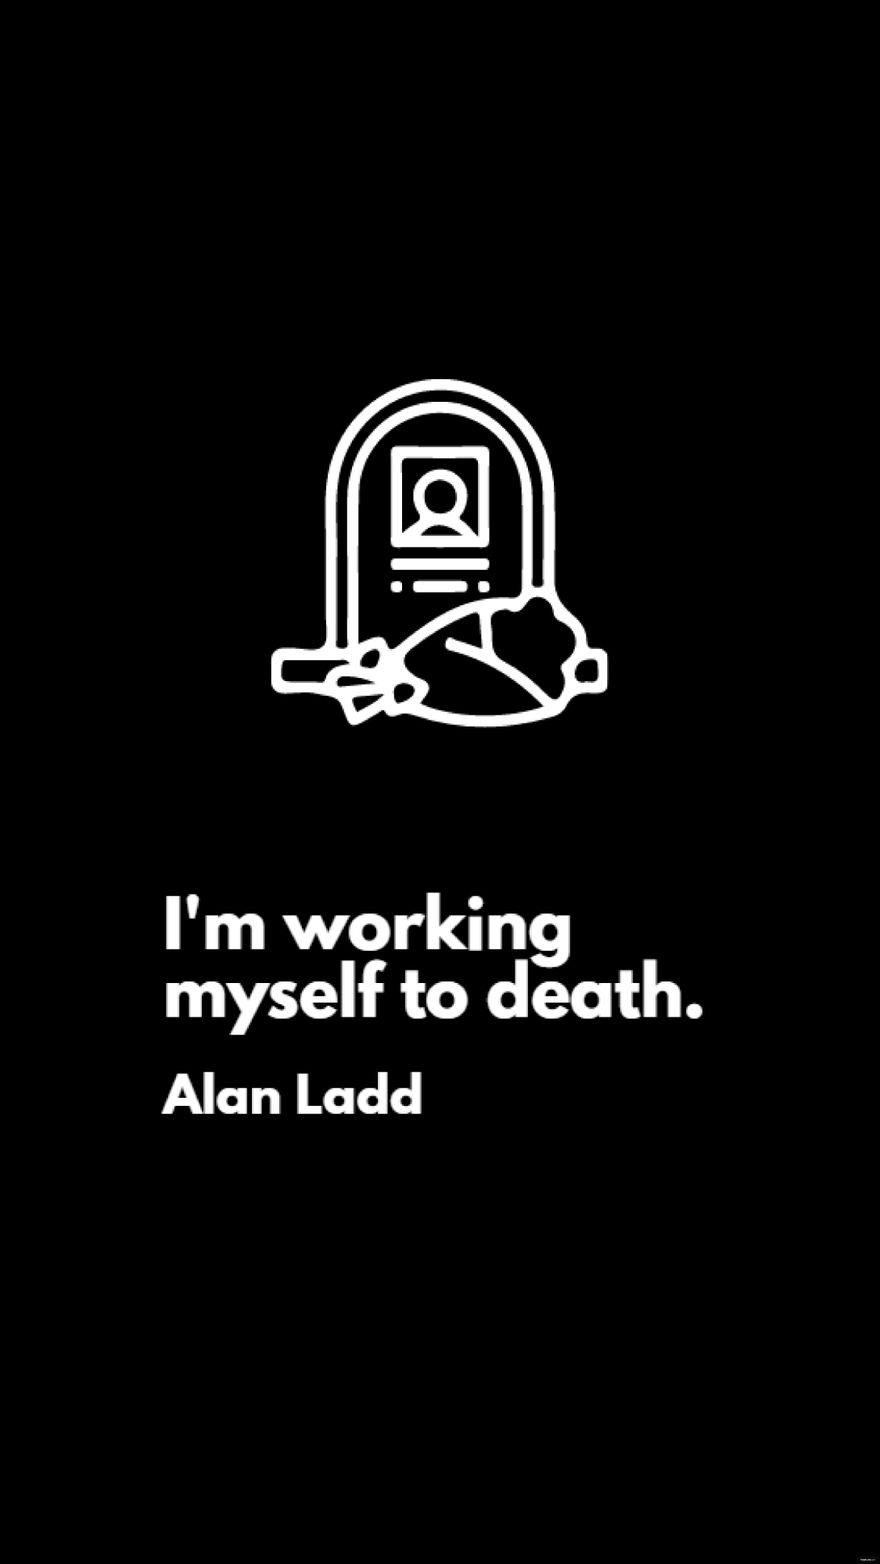 Free Alan Ladd - I'm working myself to death. in JPG